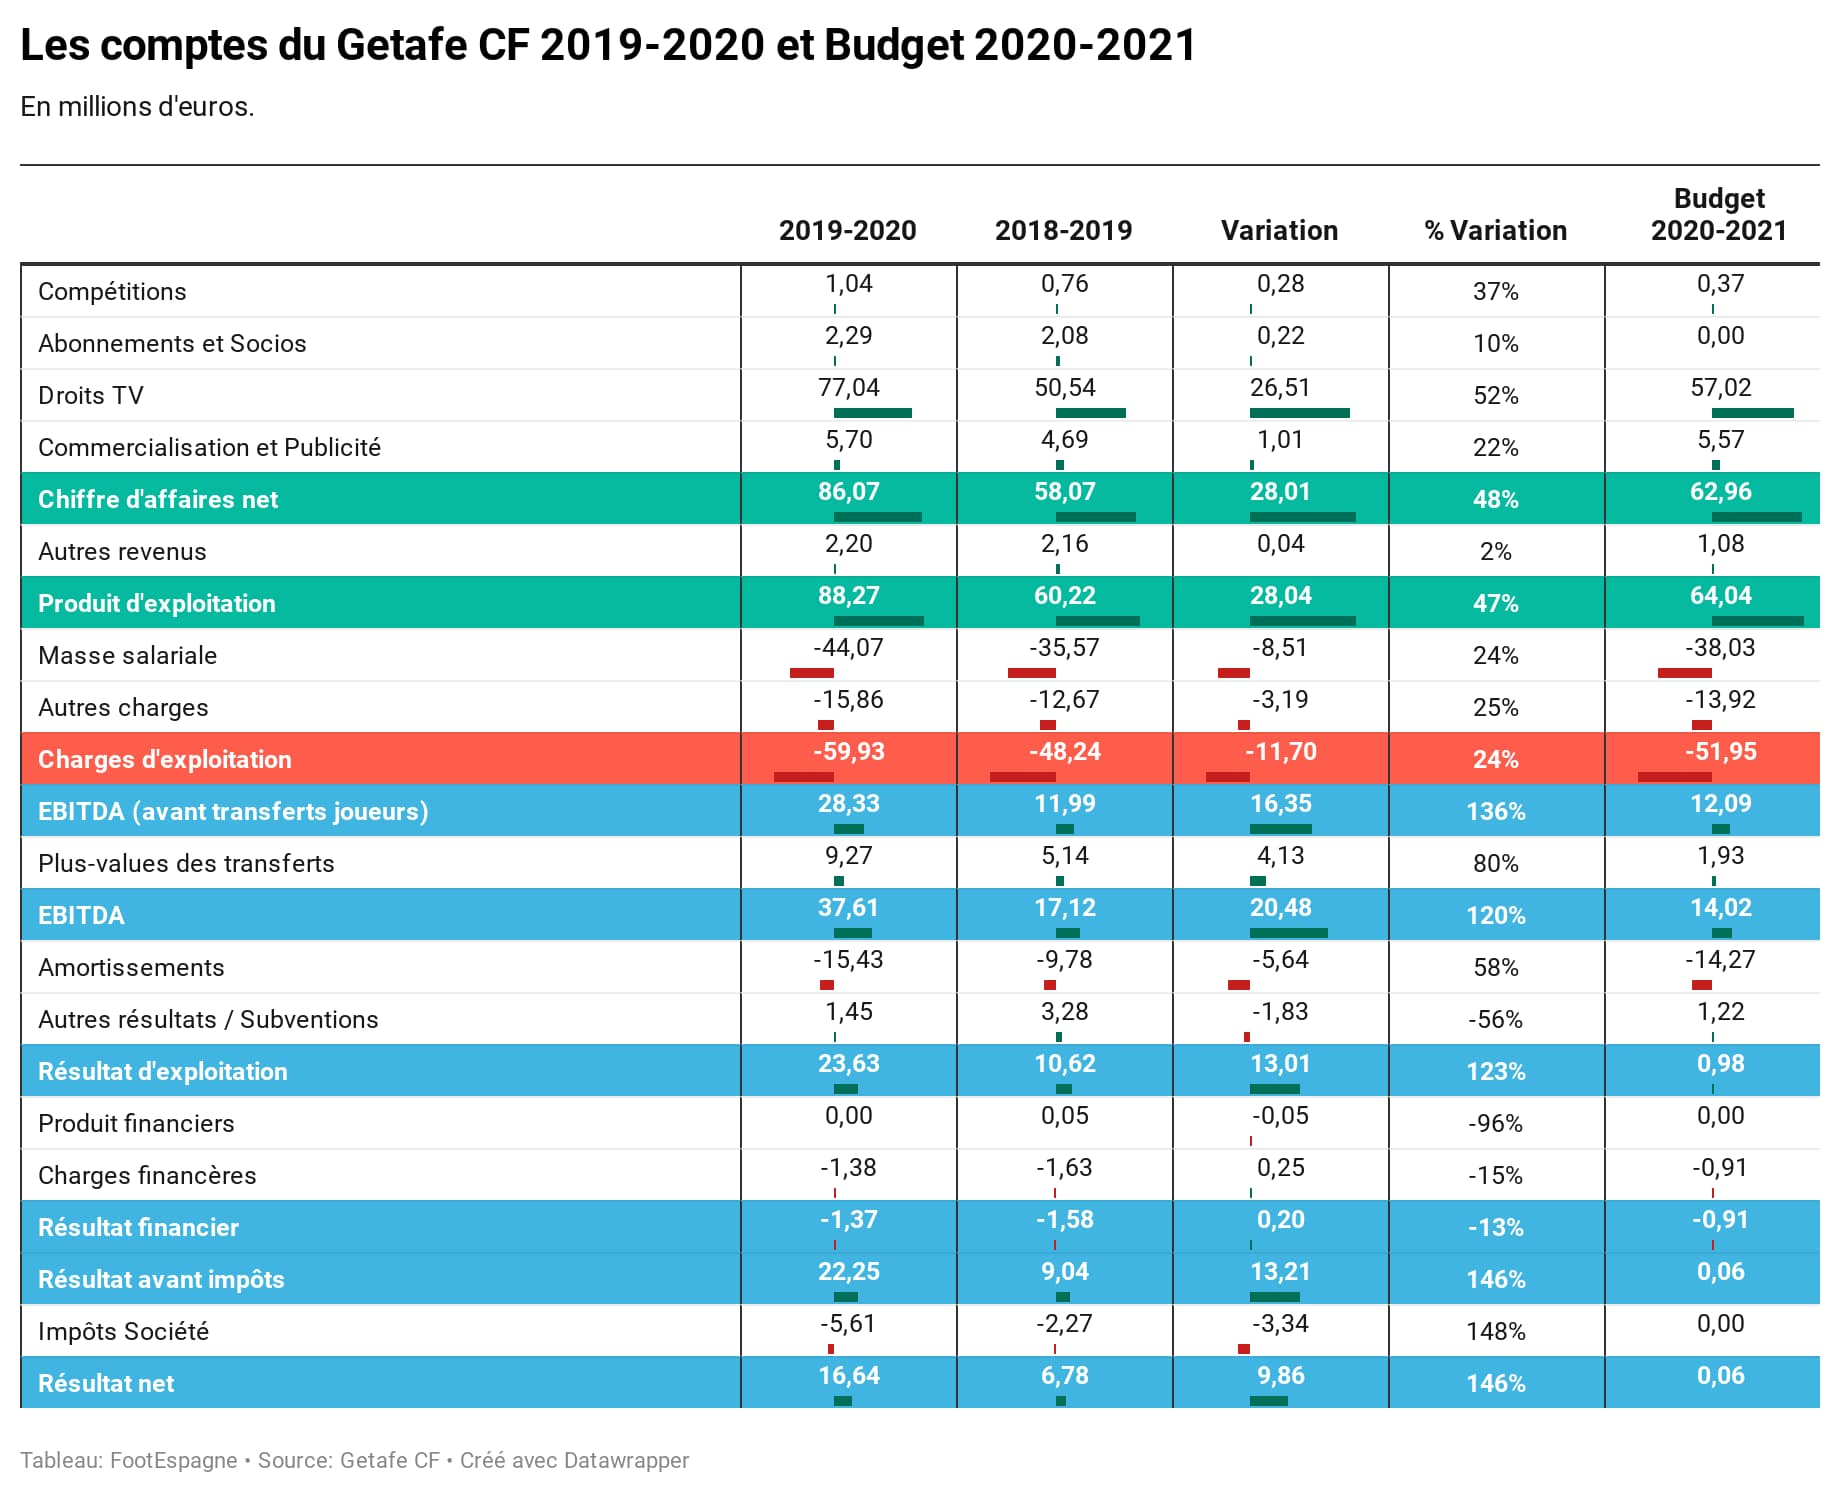 Comptes de résultat 2019/2020 et budget 2020/2021 du Getafe CF